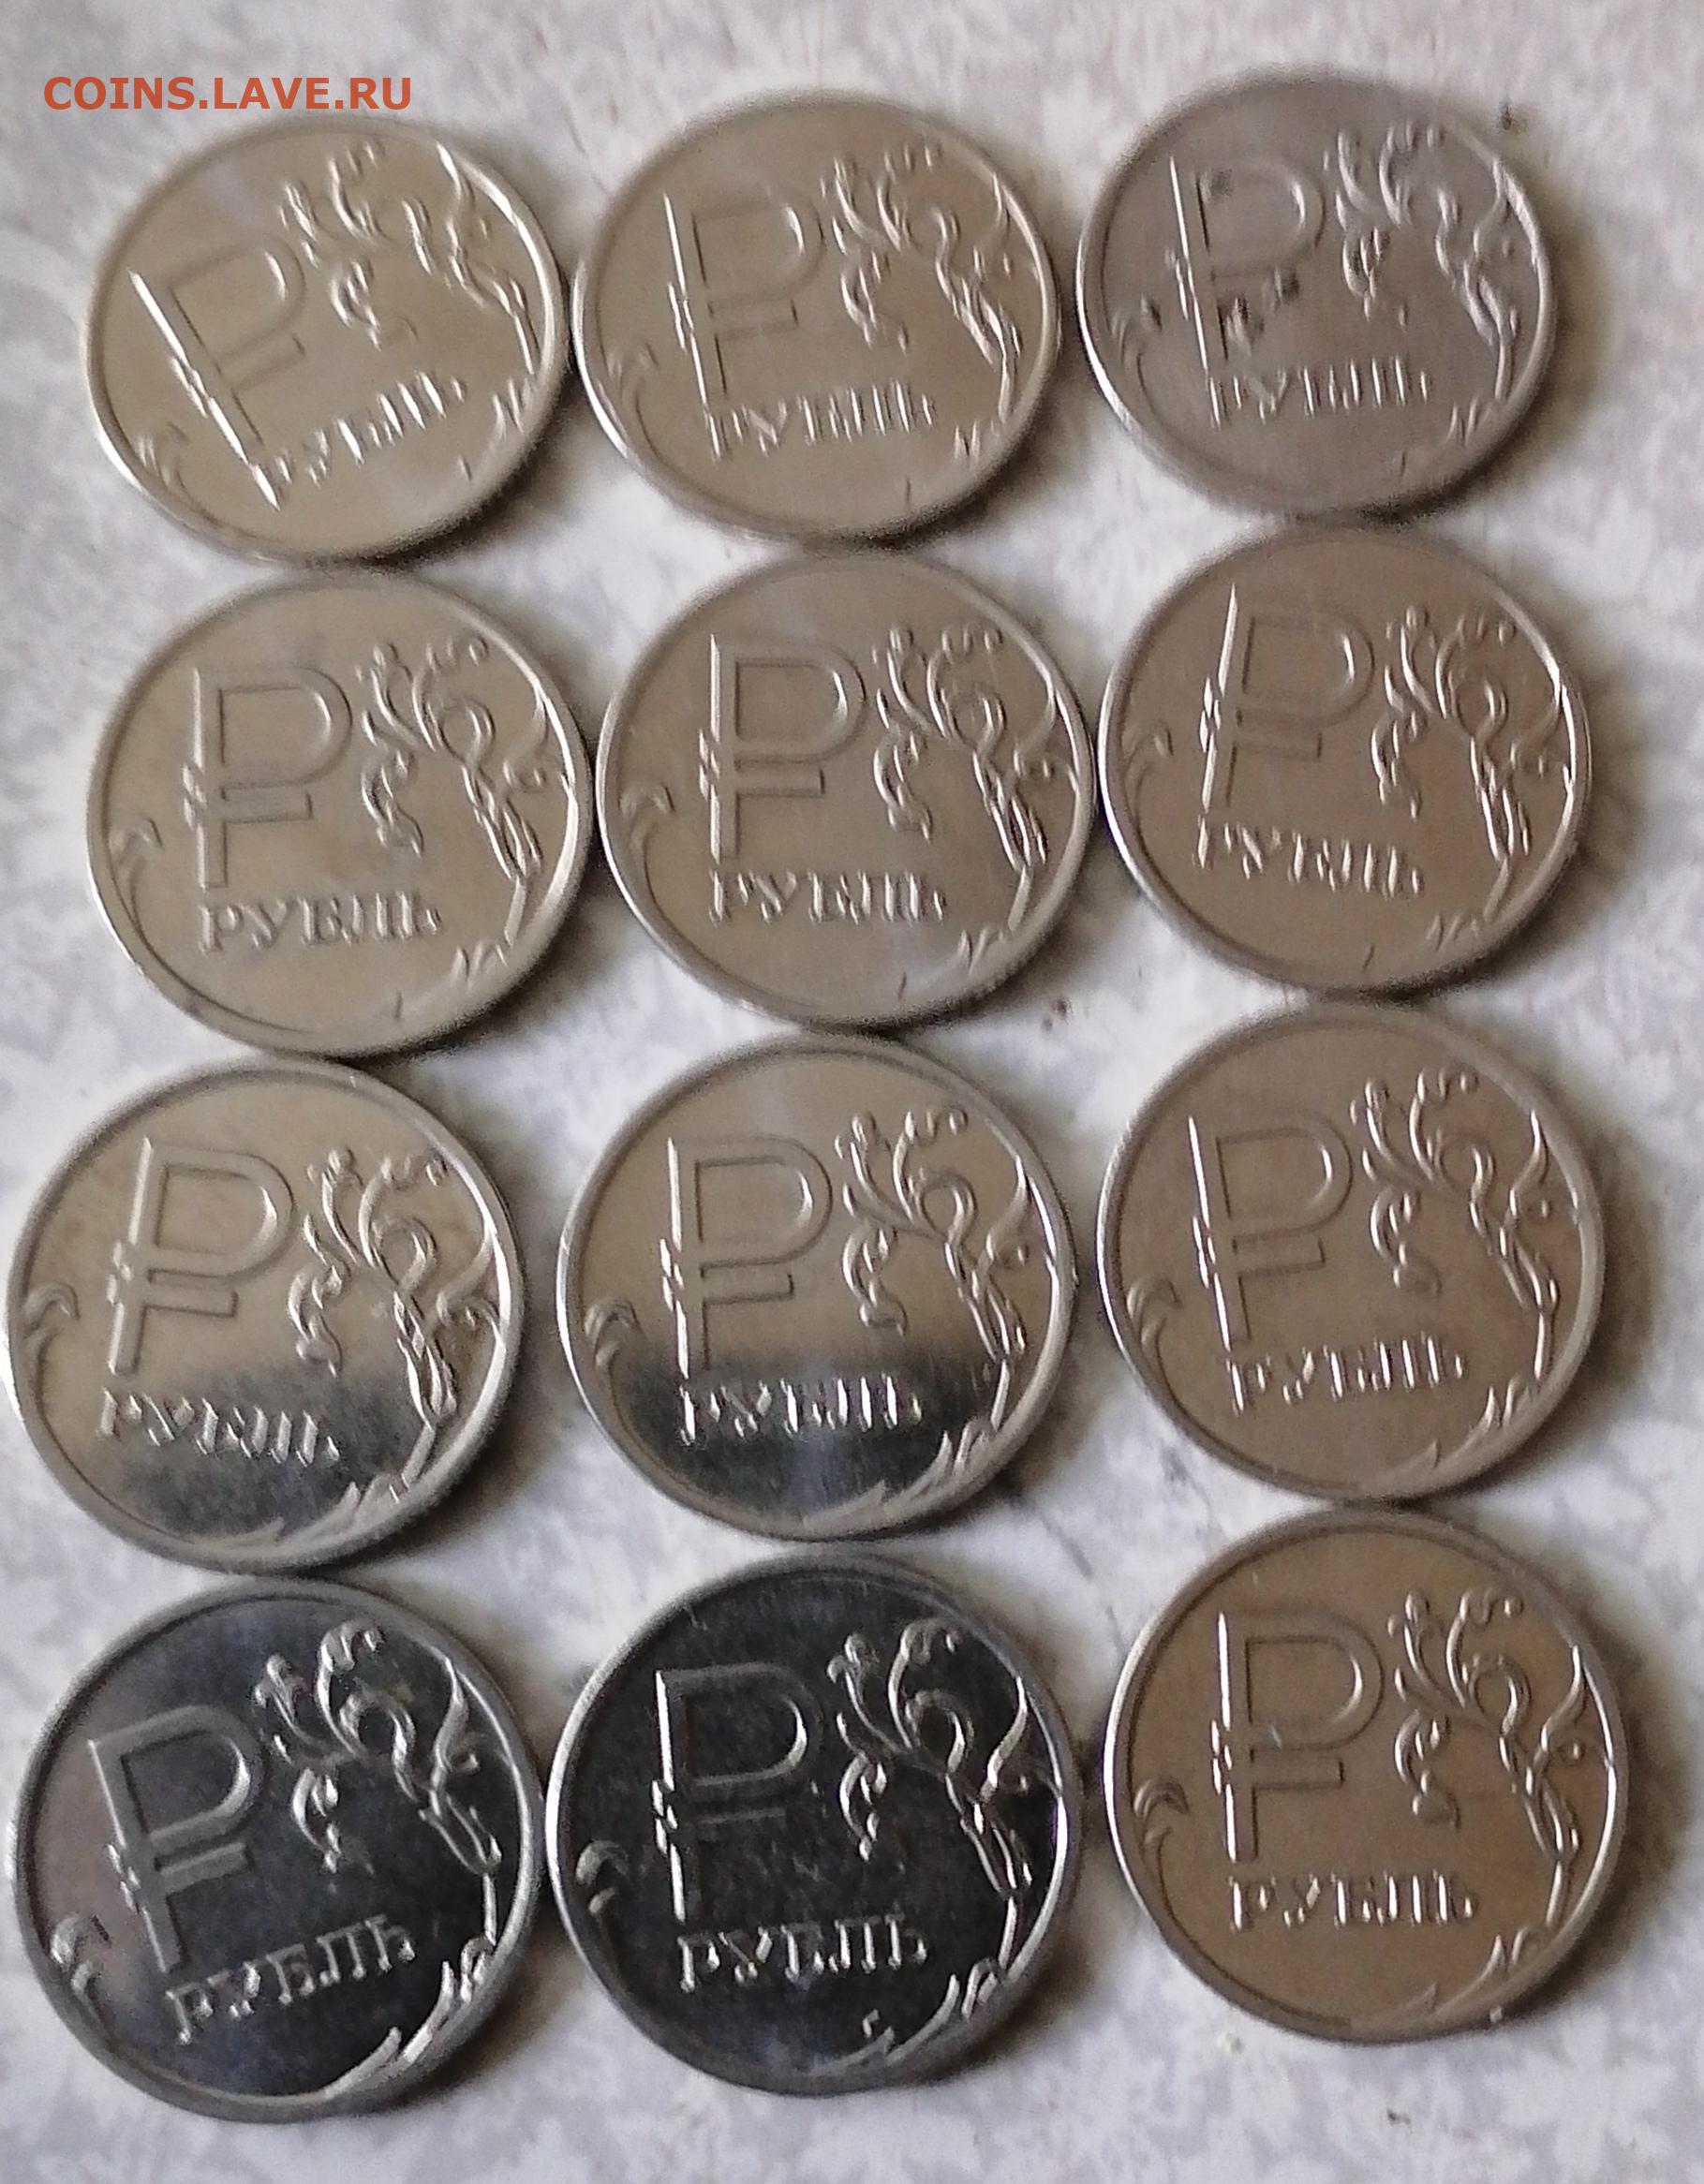 35 11 в рублях. Монета 11 рублей. Знак рубля. 31.11 Рублей. Монета Российская 1 рубль со значком рублём.